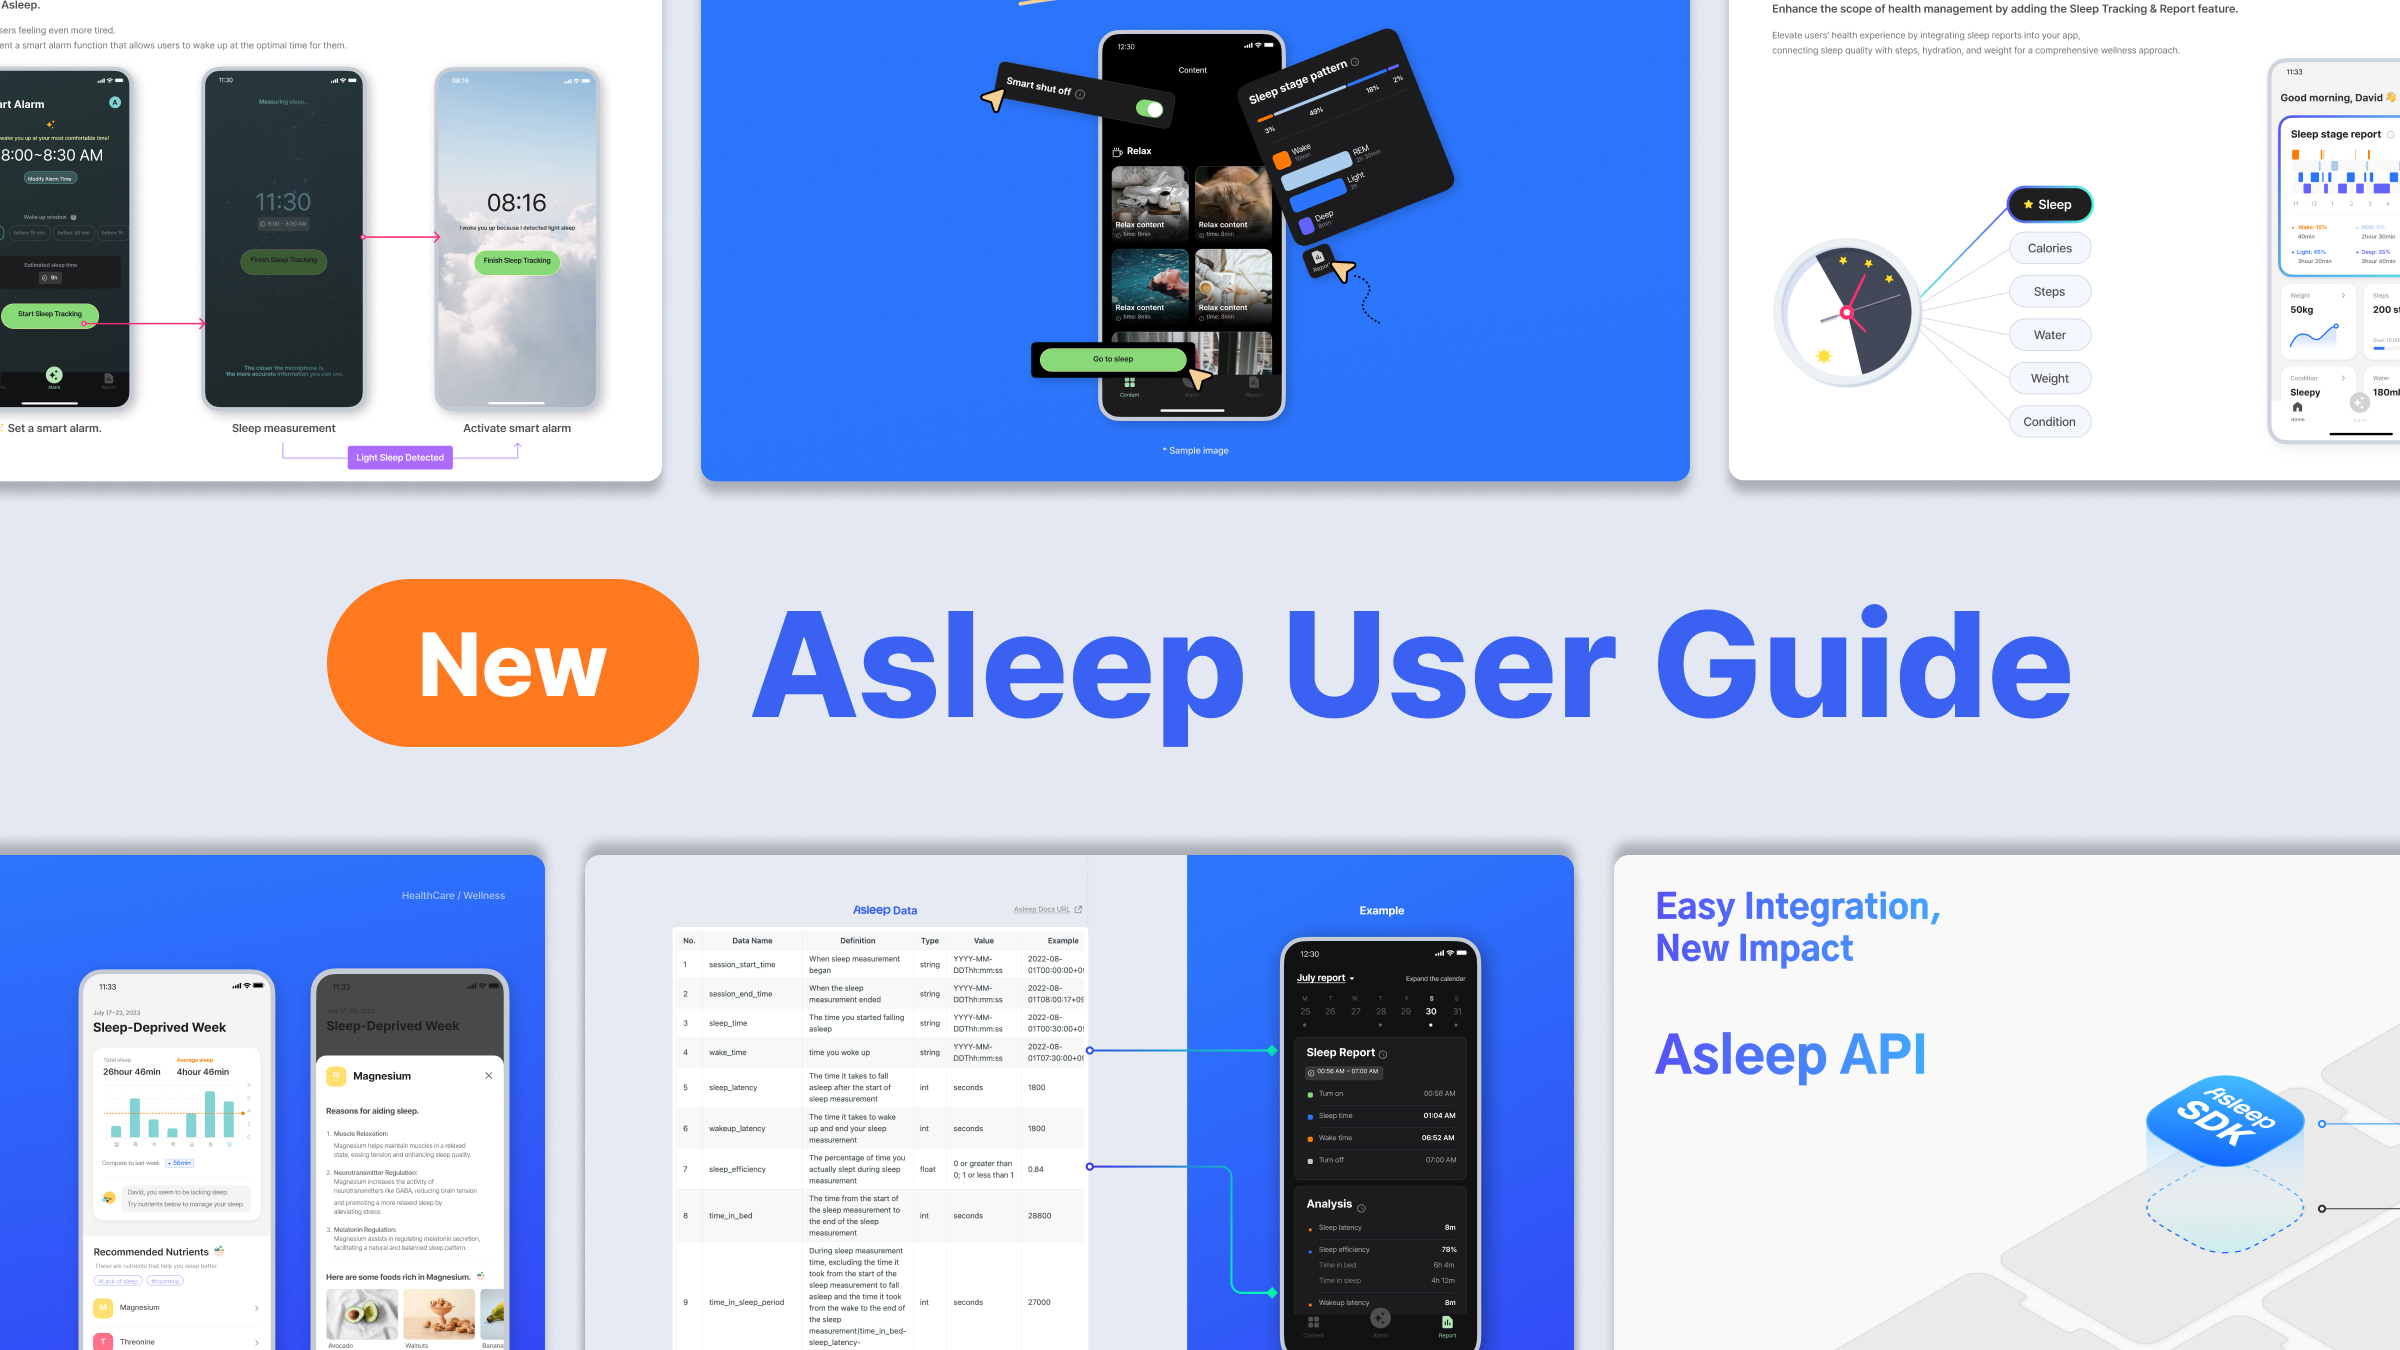 Asleep User Guide